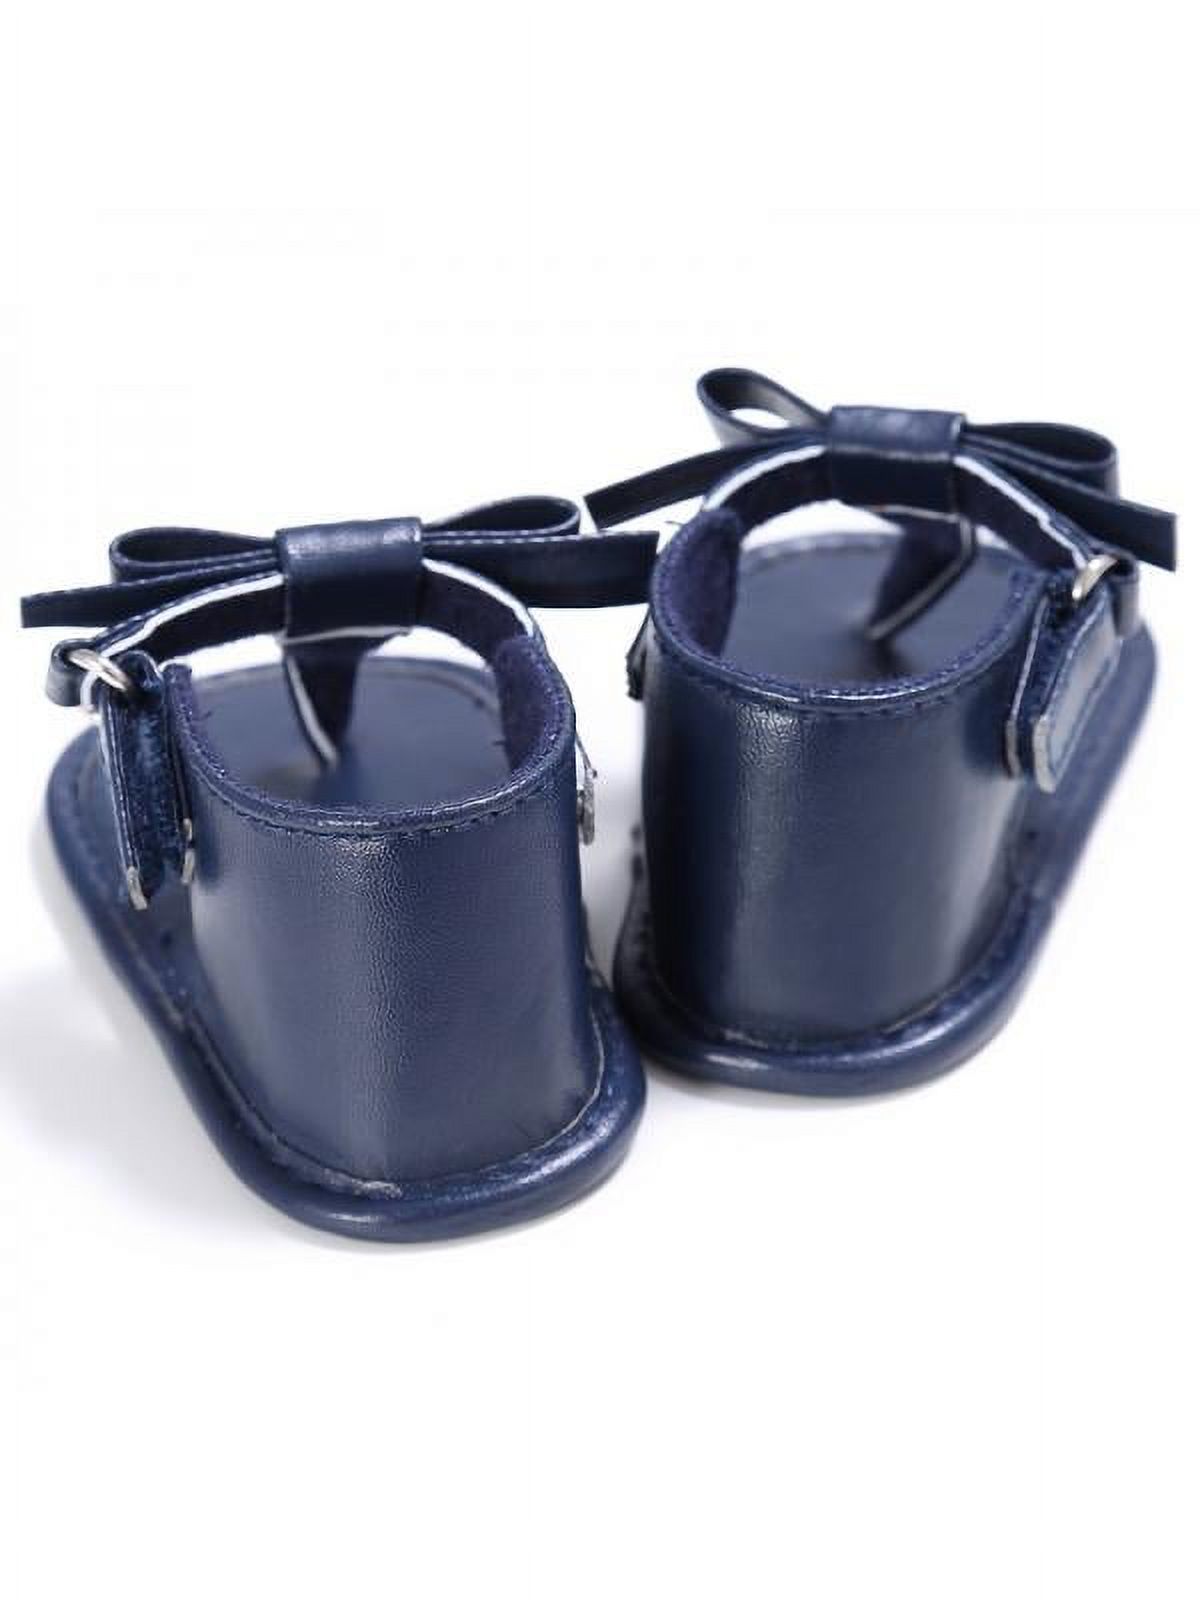 Ochine Newborn PU Leather Soft Shoes Summer Baby Casual Flower Toddler Prewalker Sandals - image 3 of 6